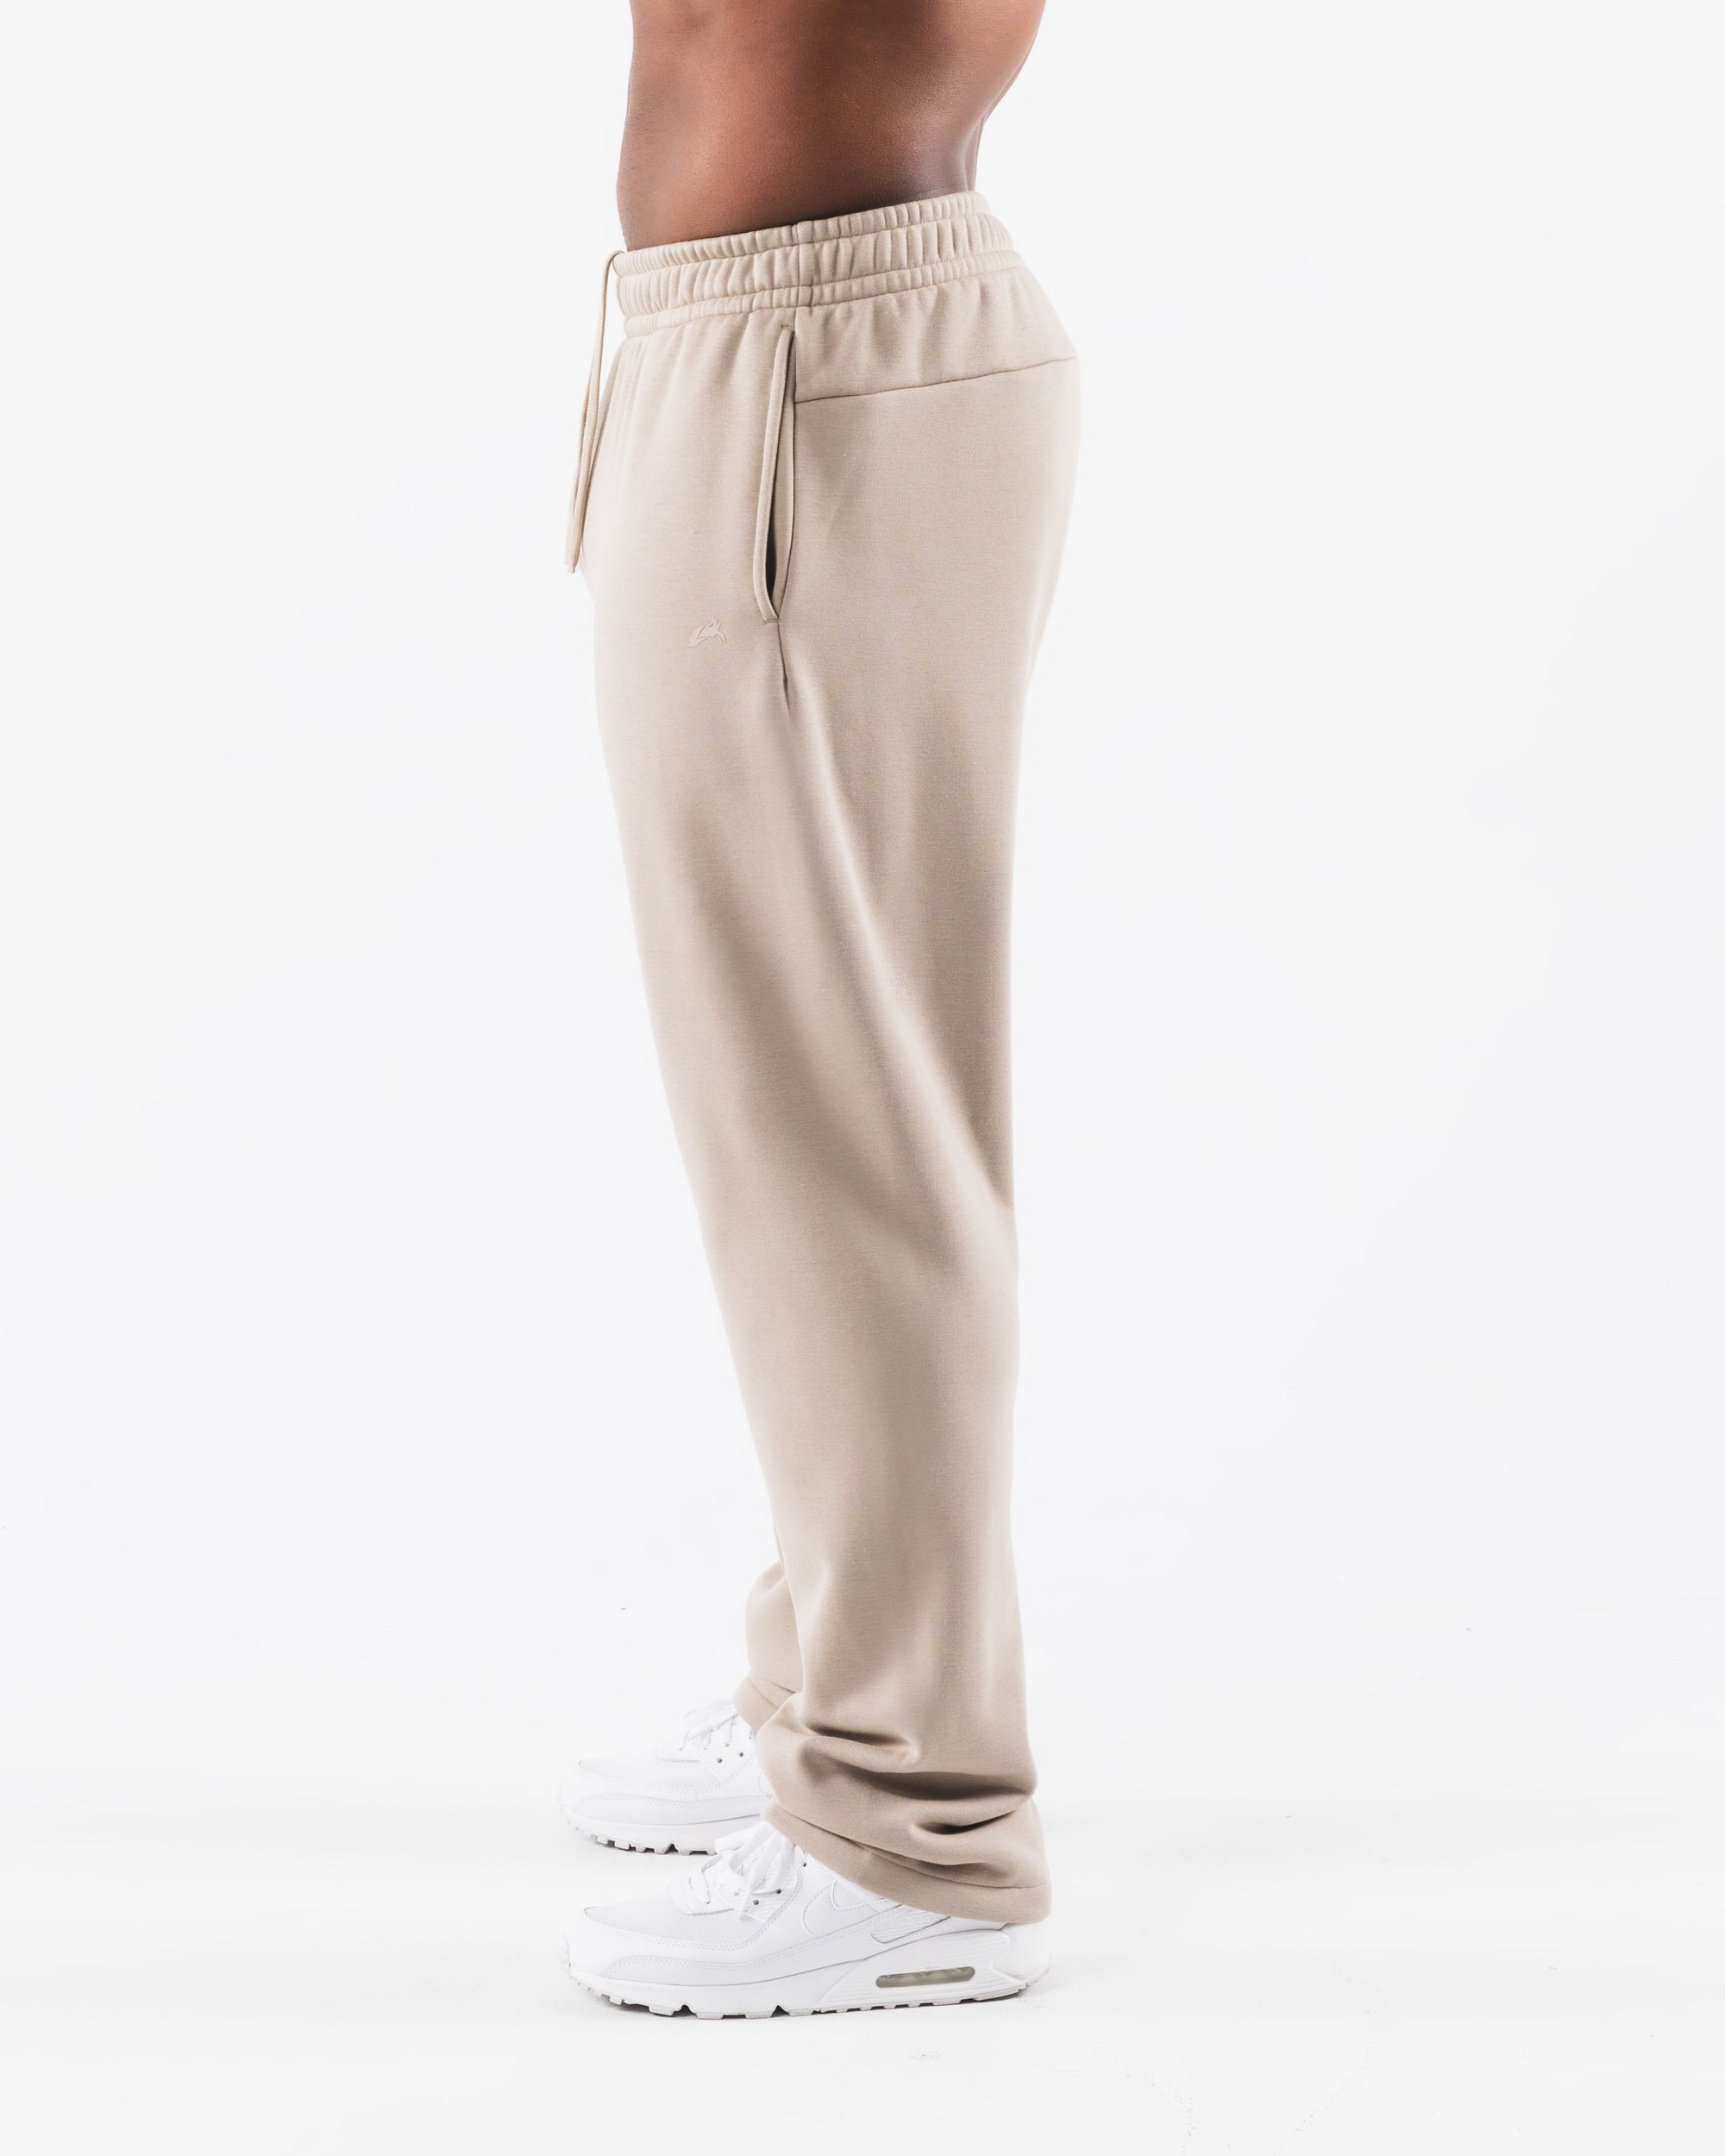 Alphalete $68 Identity Jogger Pant Size Medium Sweatpant Activewear